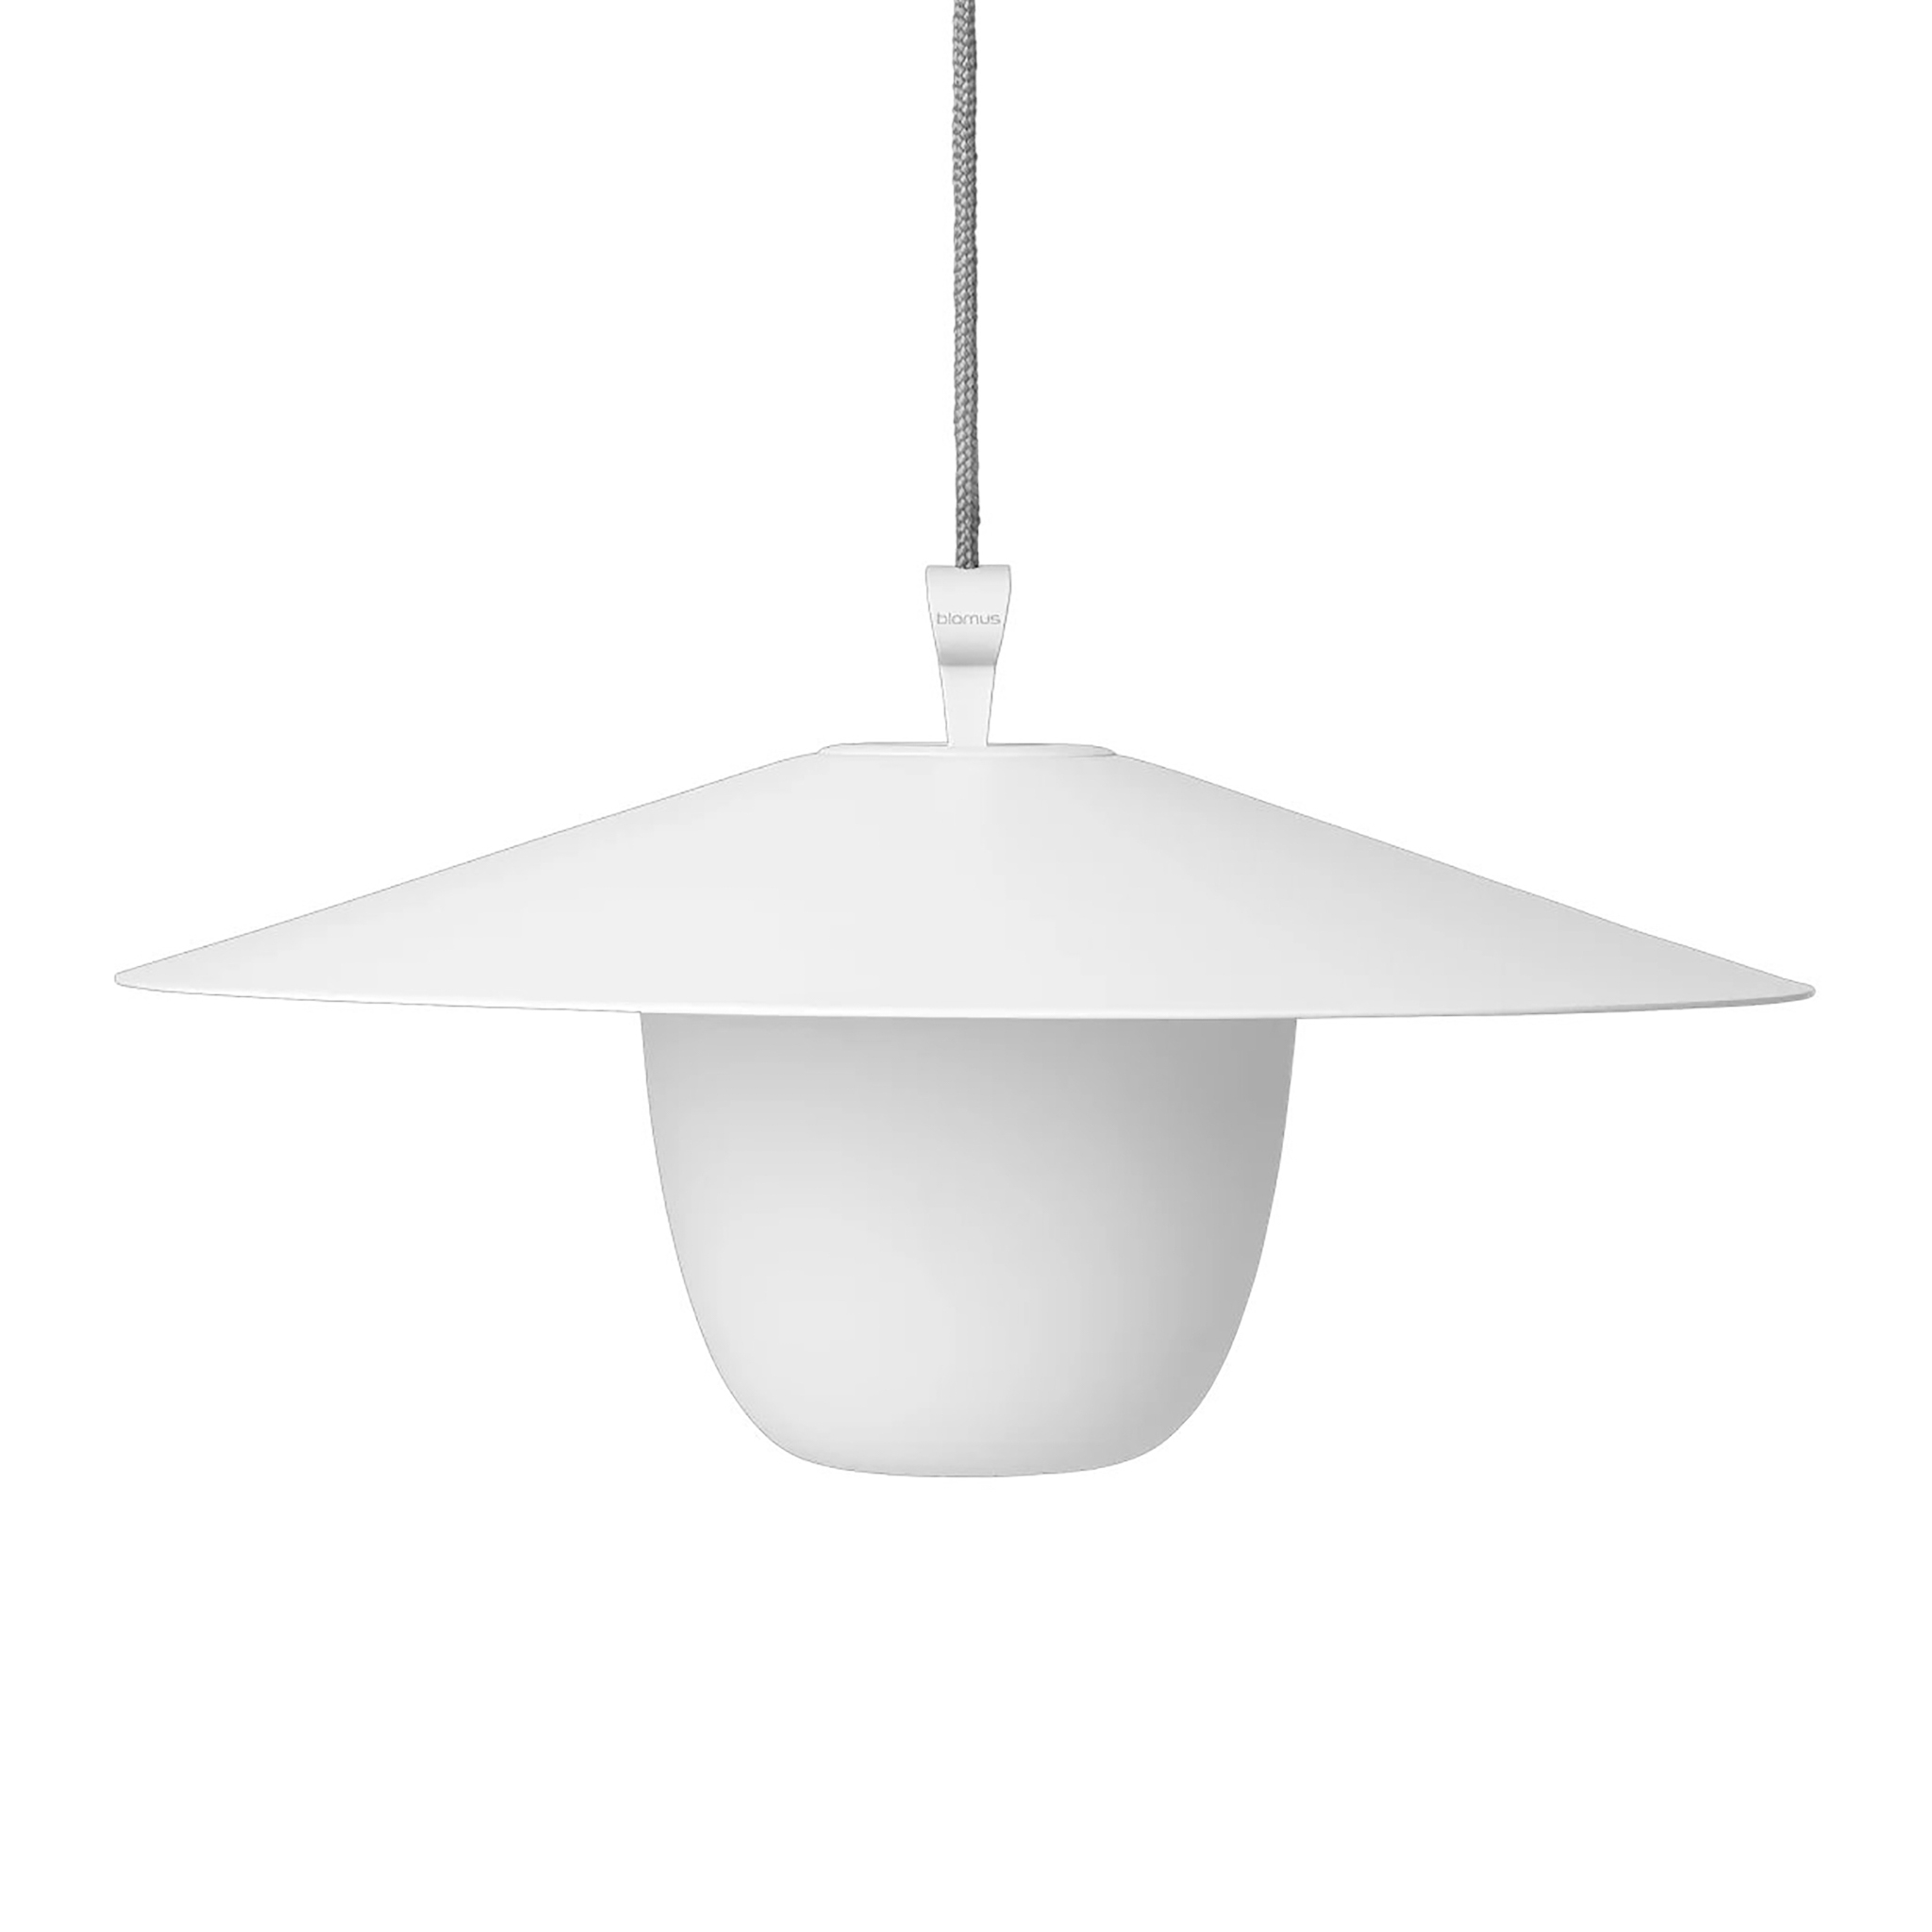 BLOMUS // ANI LAMP LARGE - MOBILE LED TABLE LAMP | WHITE